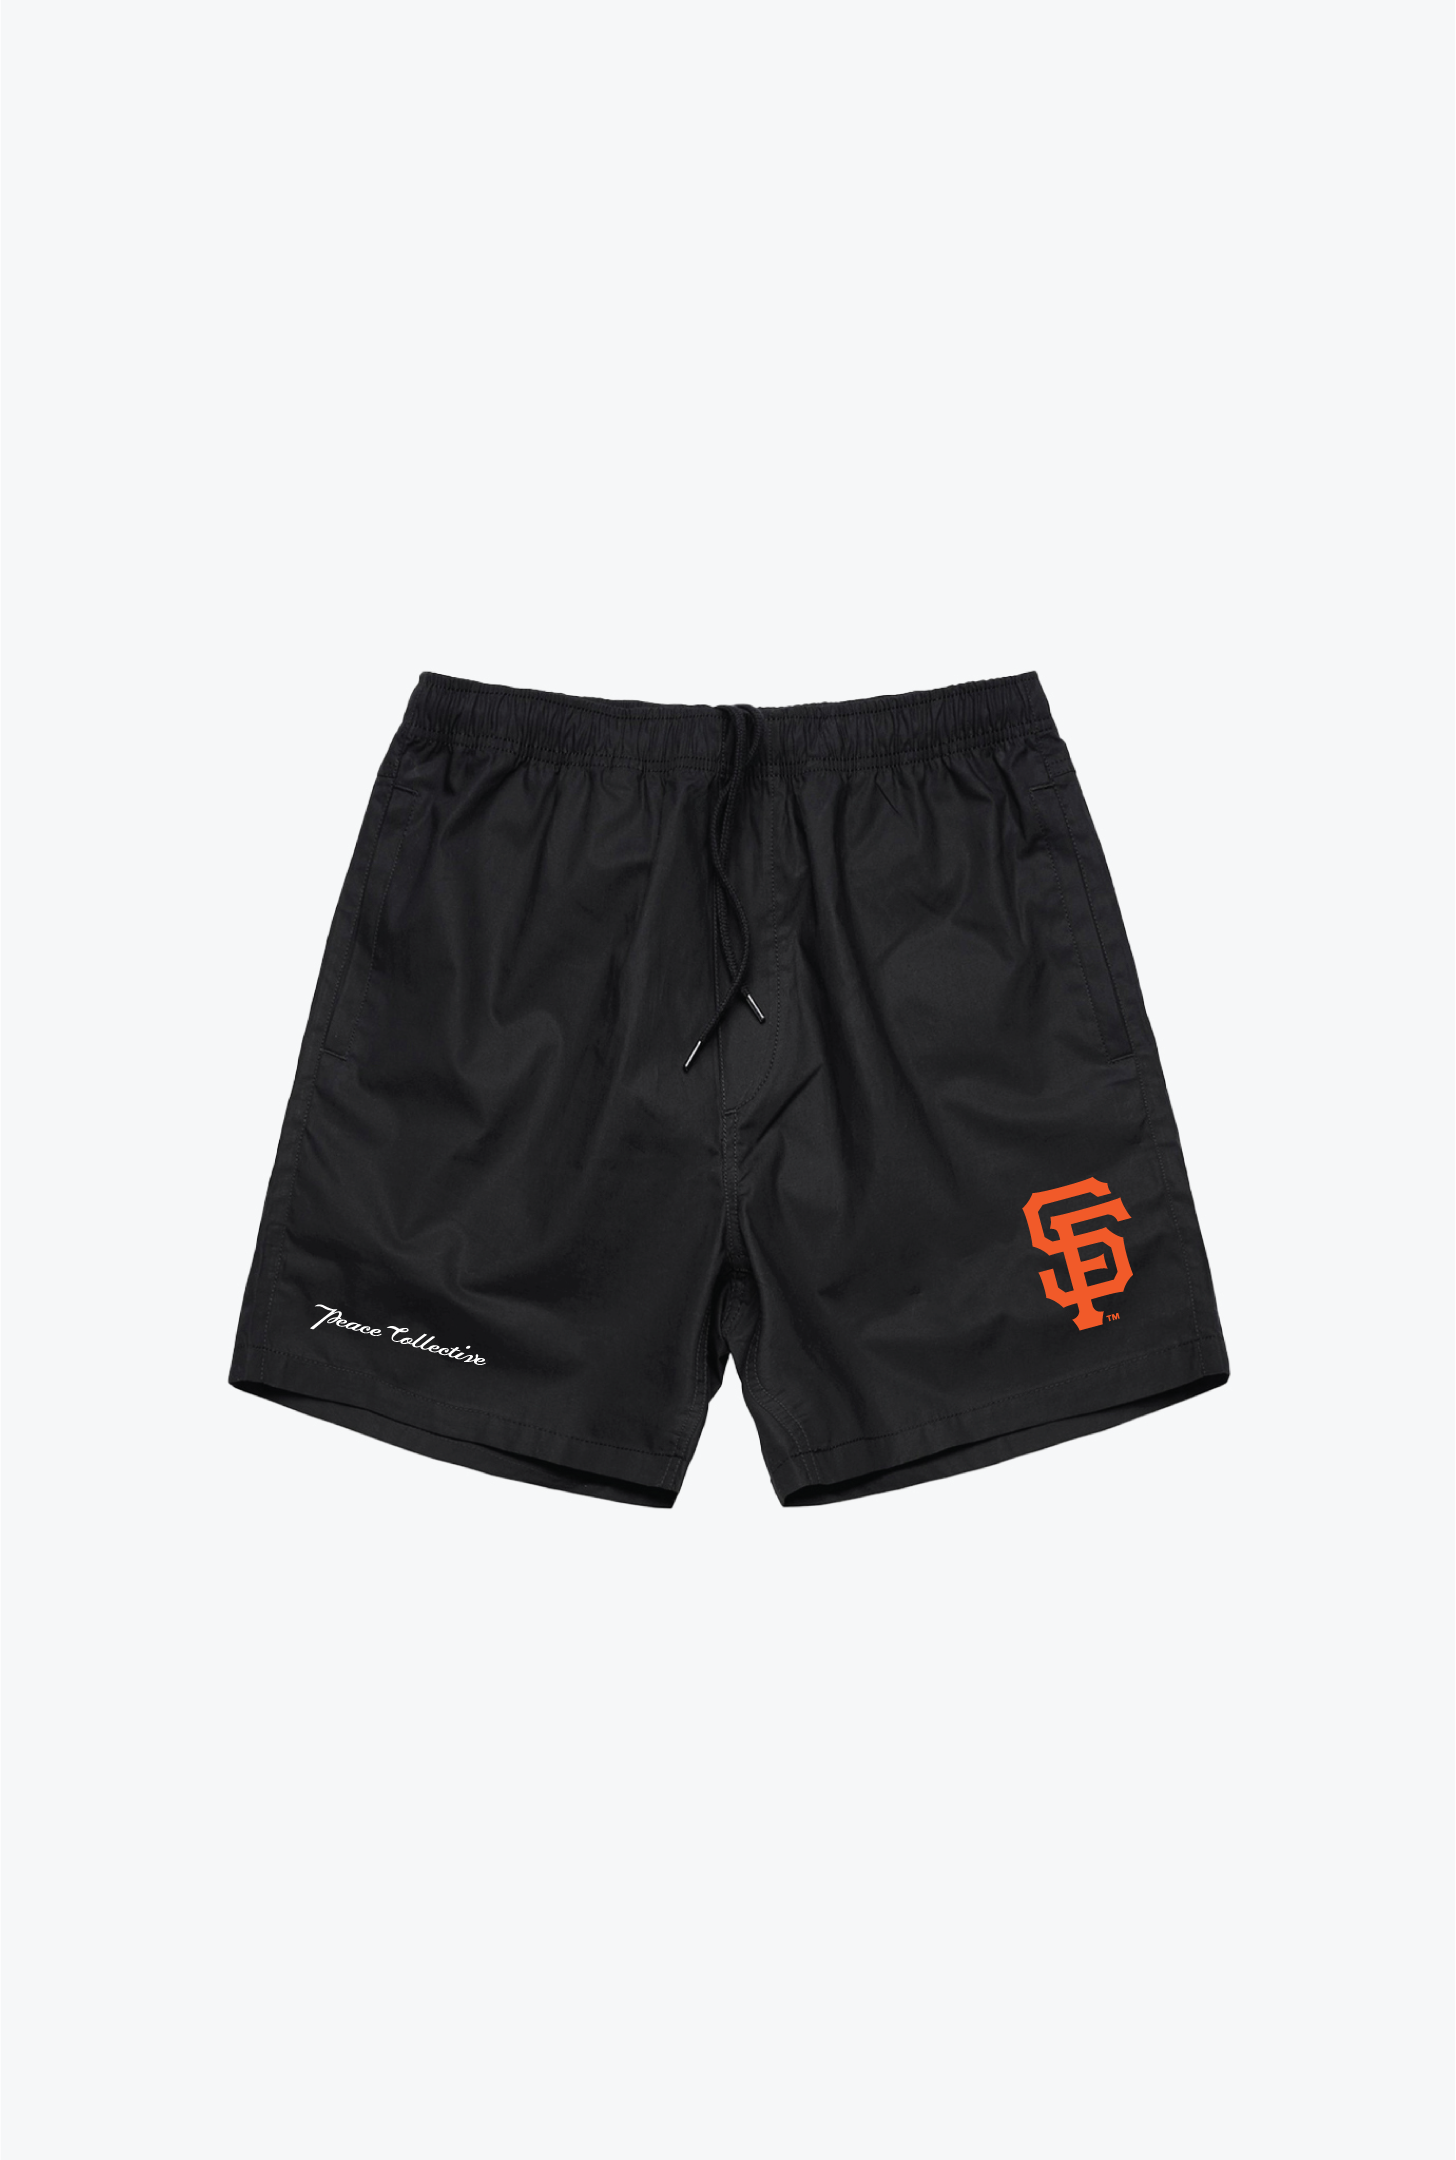 San Francisco Giants Board Shorts - Black